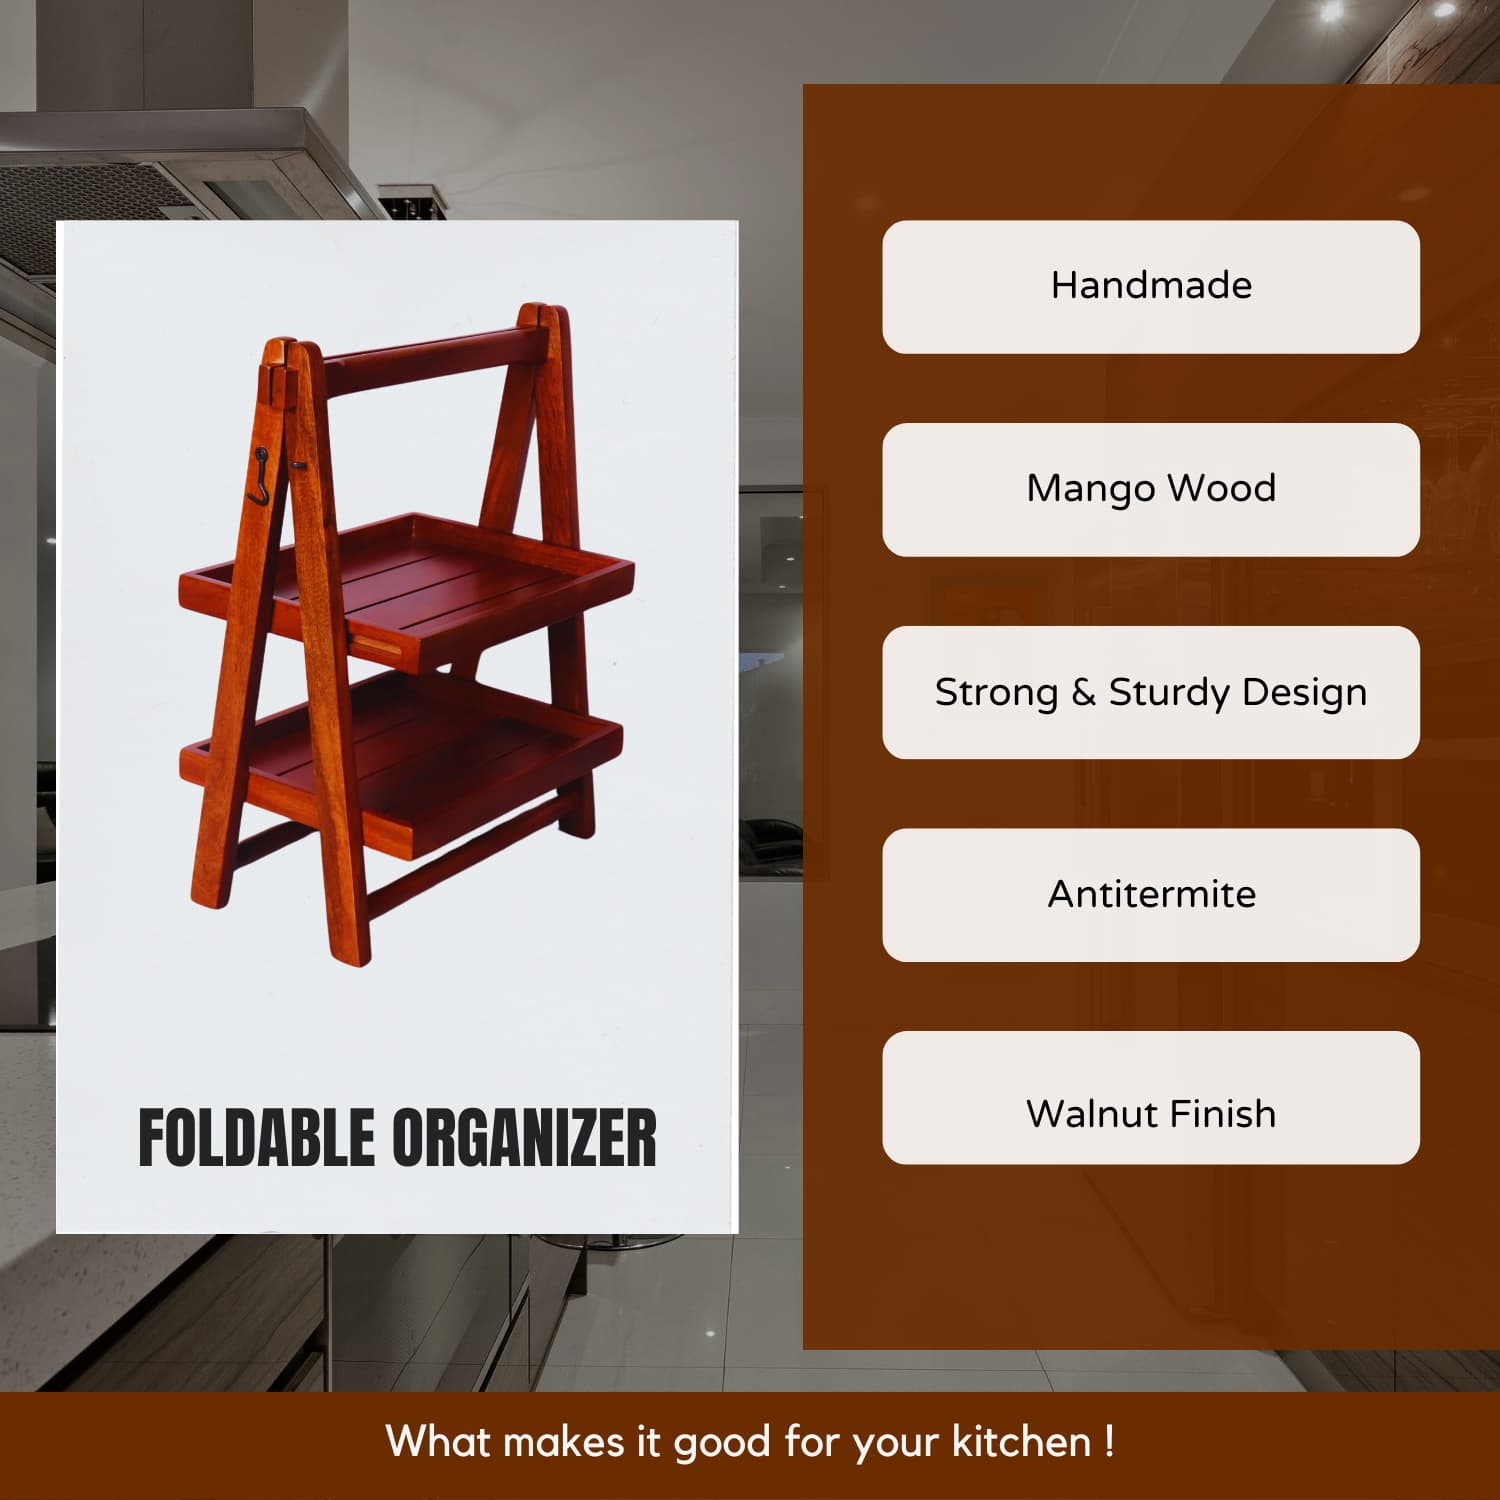 Foldable Kitchen organizer features